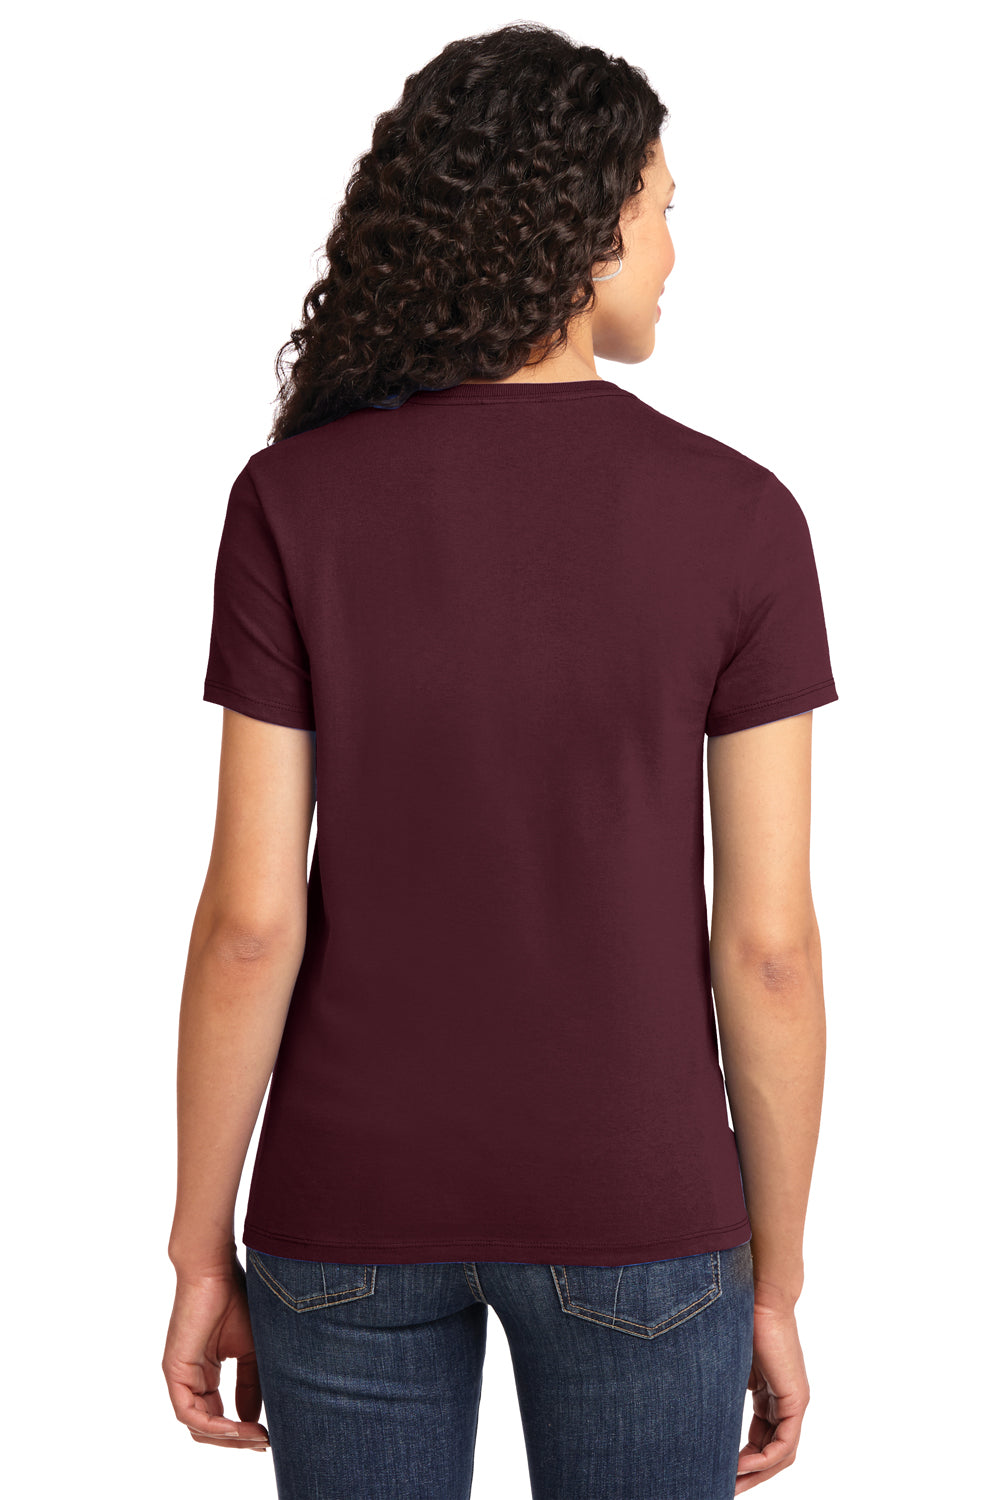 Port & Company LPC61 Womens Essential Short Sleeve Crewneck T-Shirt Maroon Back